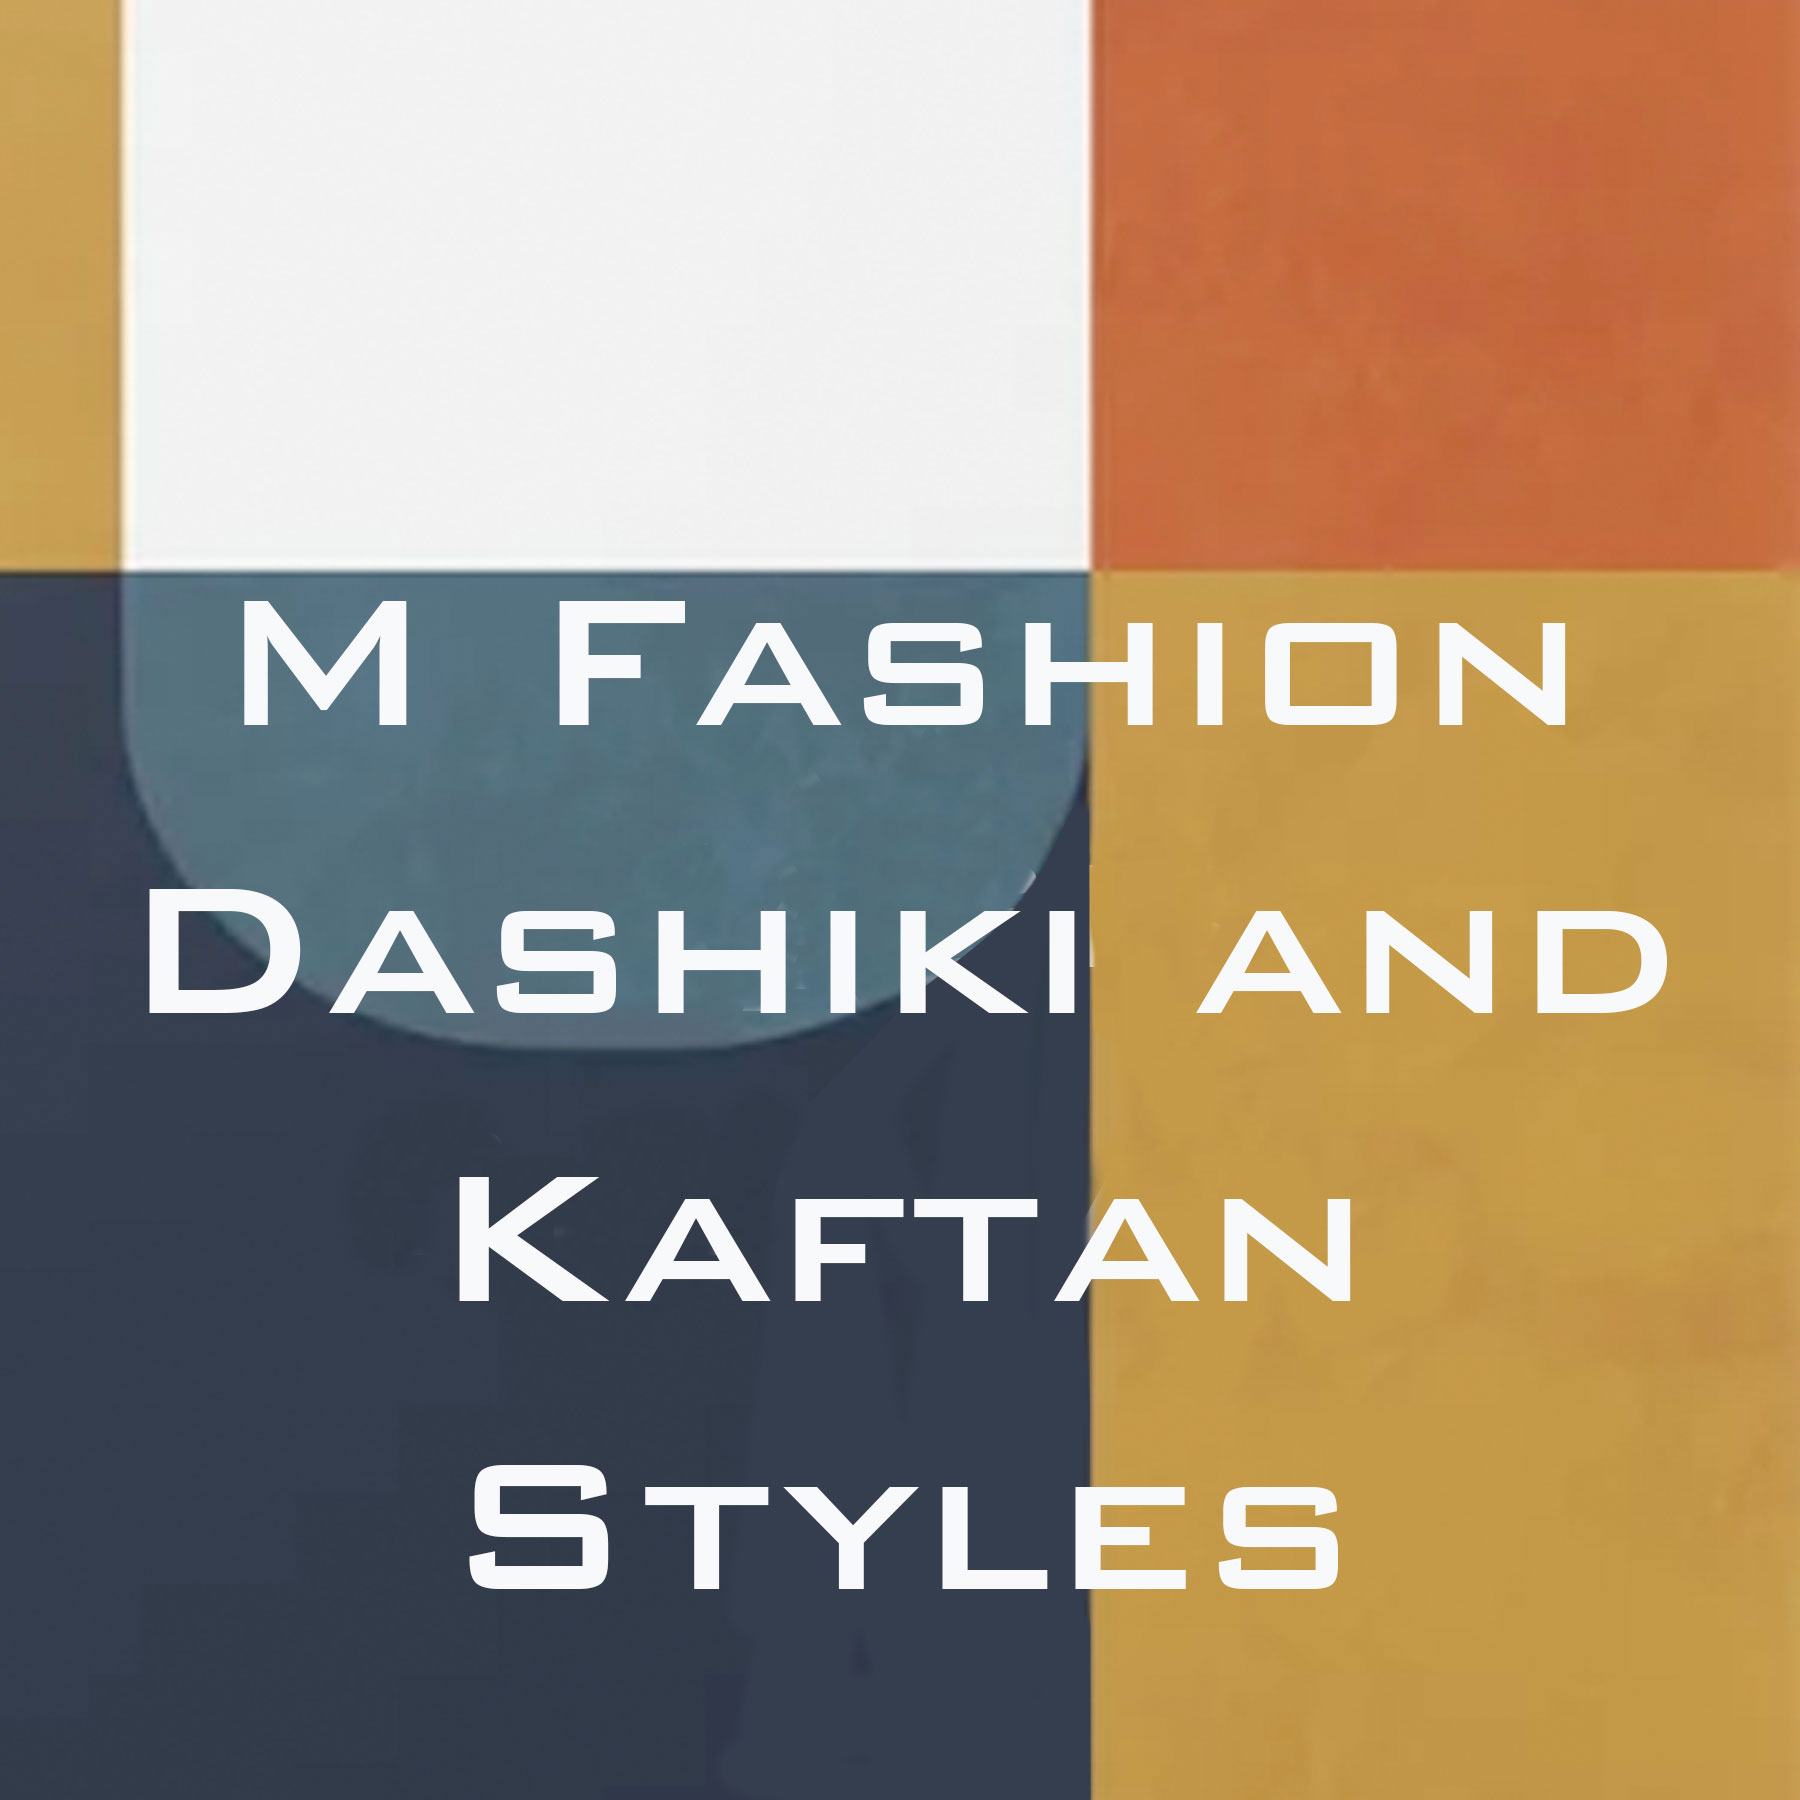 Wholesale Kaftans and Dashiki Style Tops